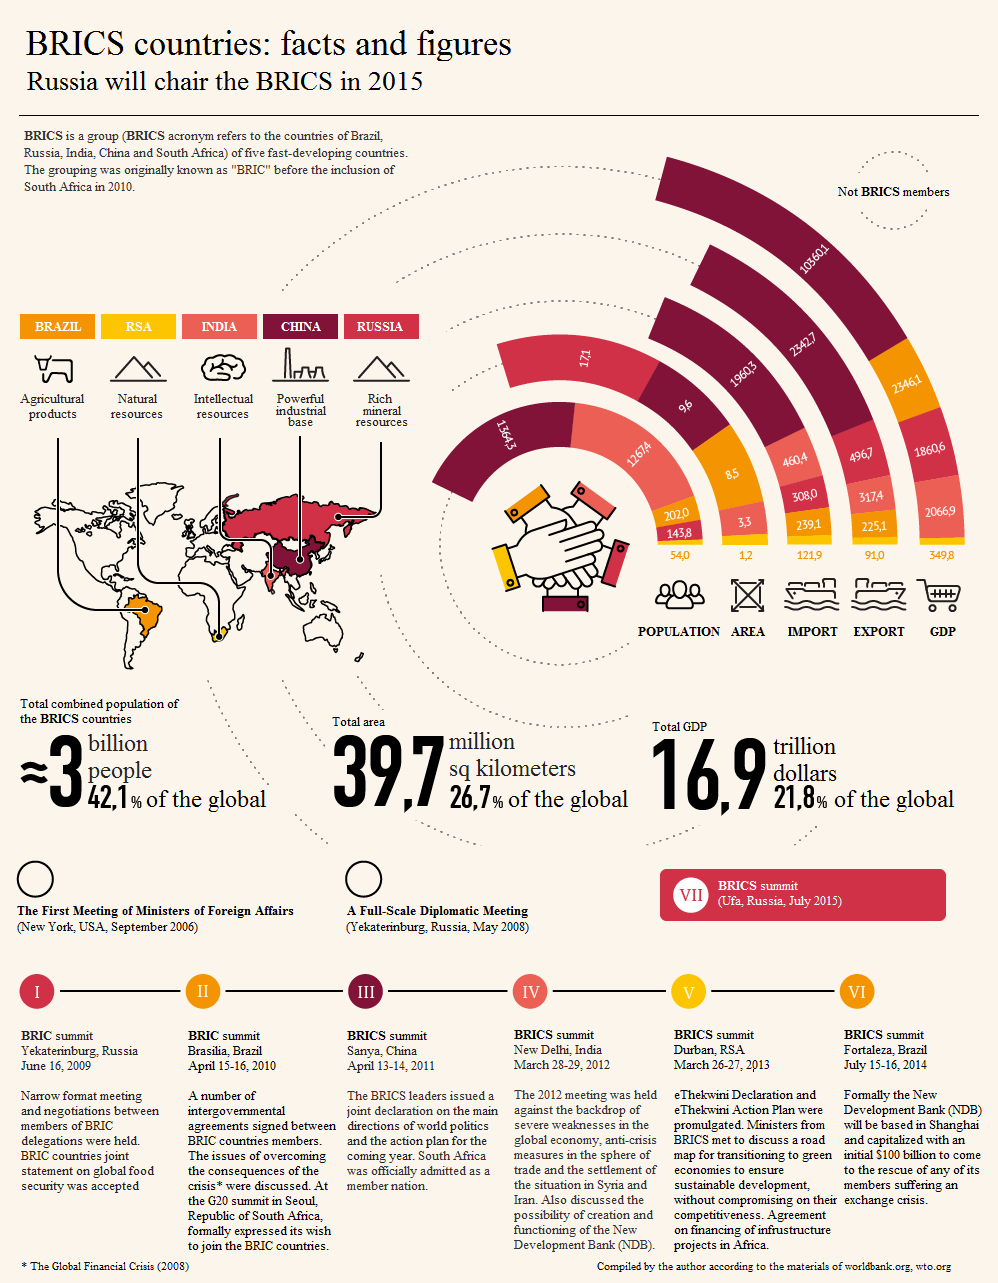 @Center for BRICS Studies, Infographics